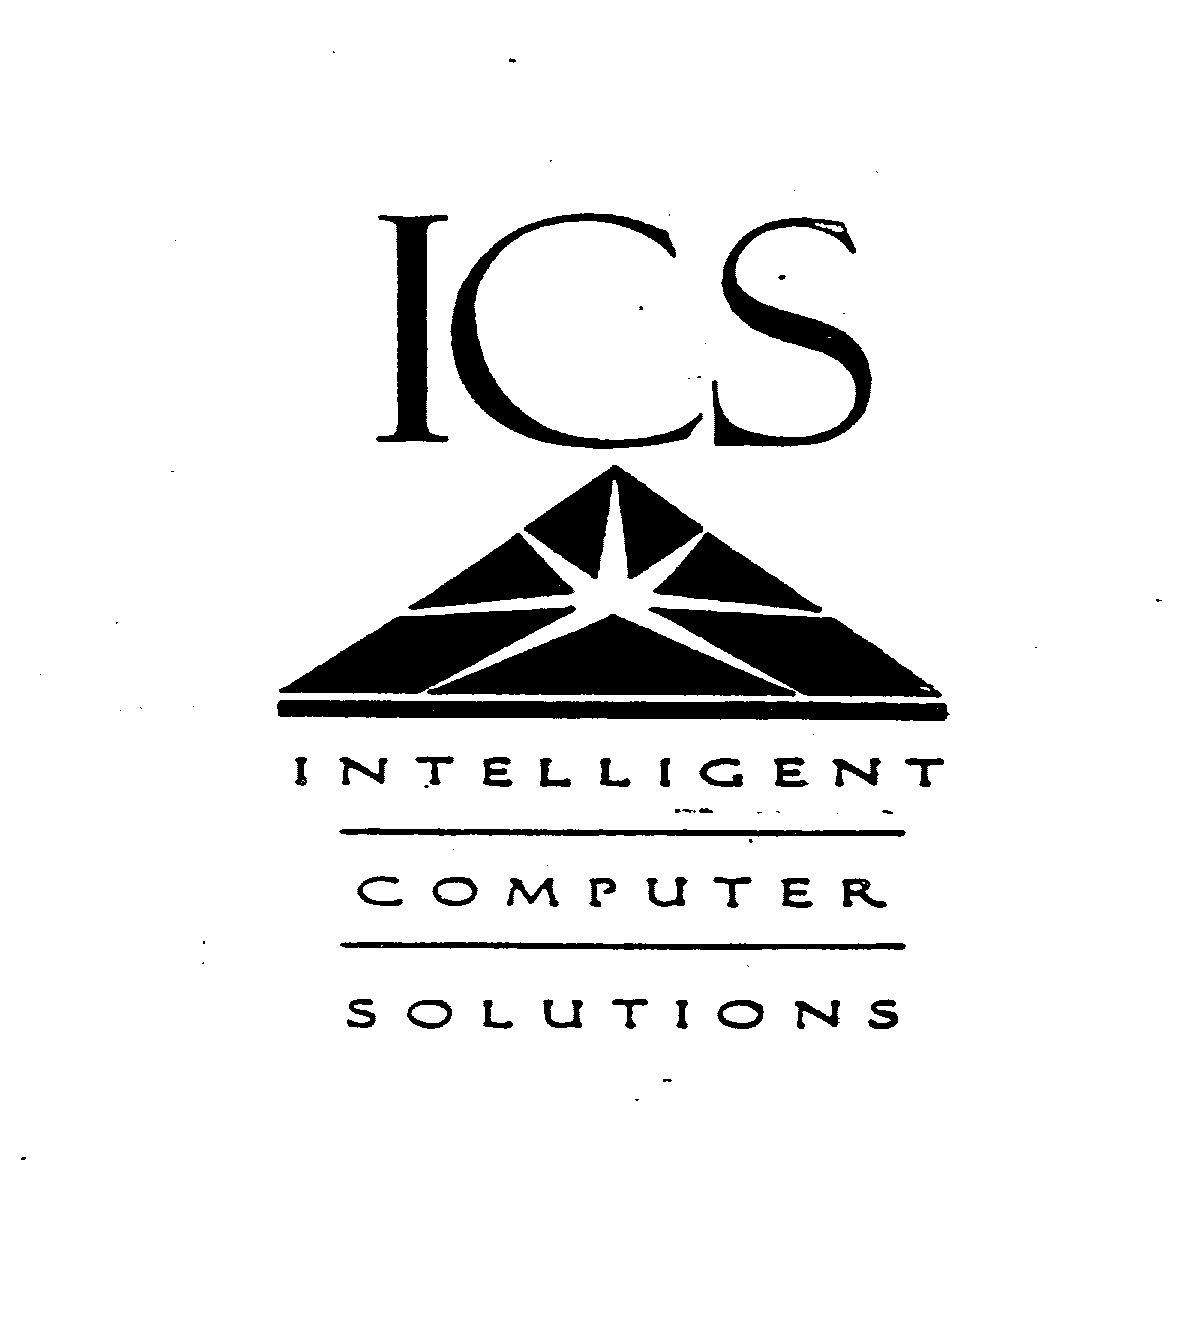  ICS INTELLIGENT COMPUTER SOLUTIONS